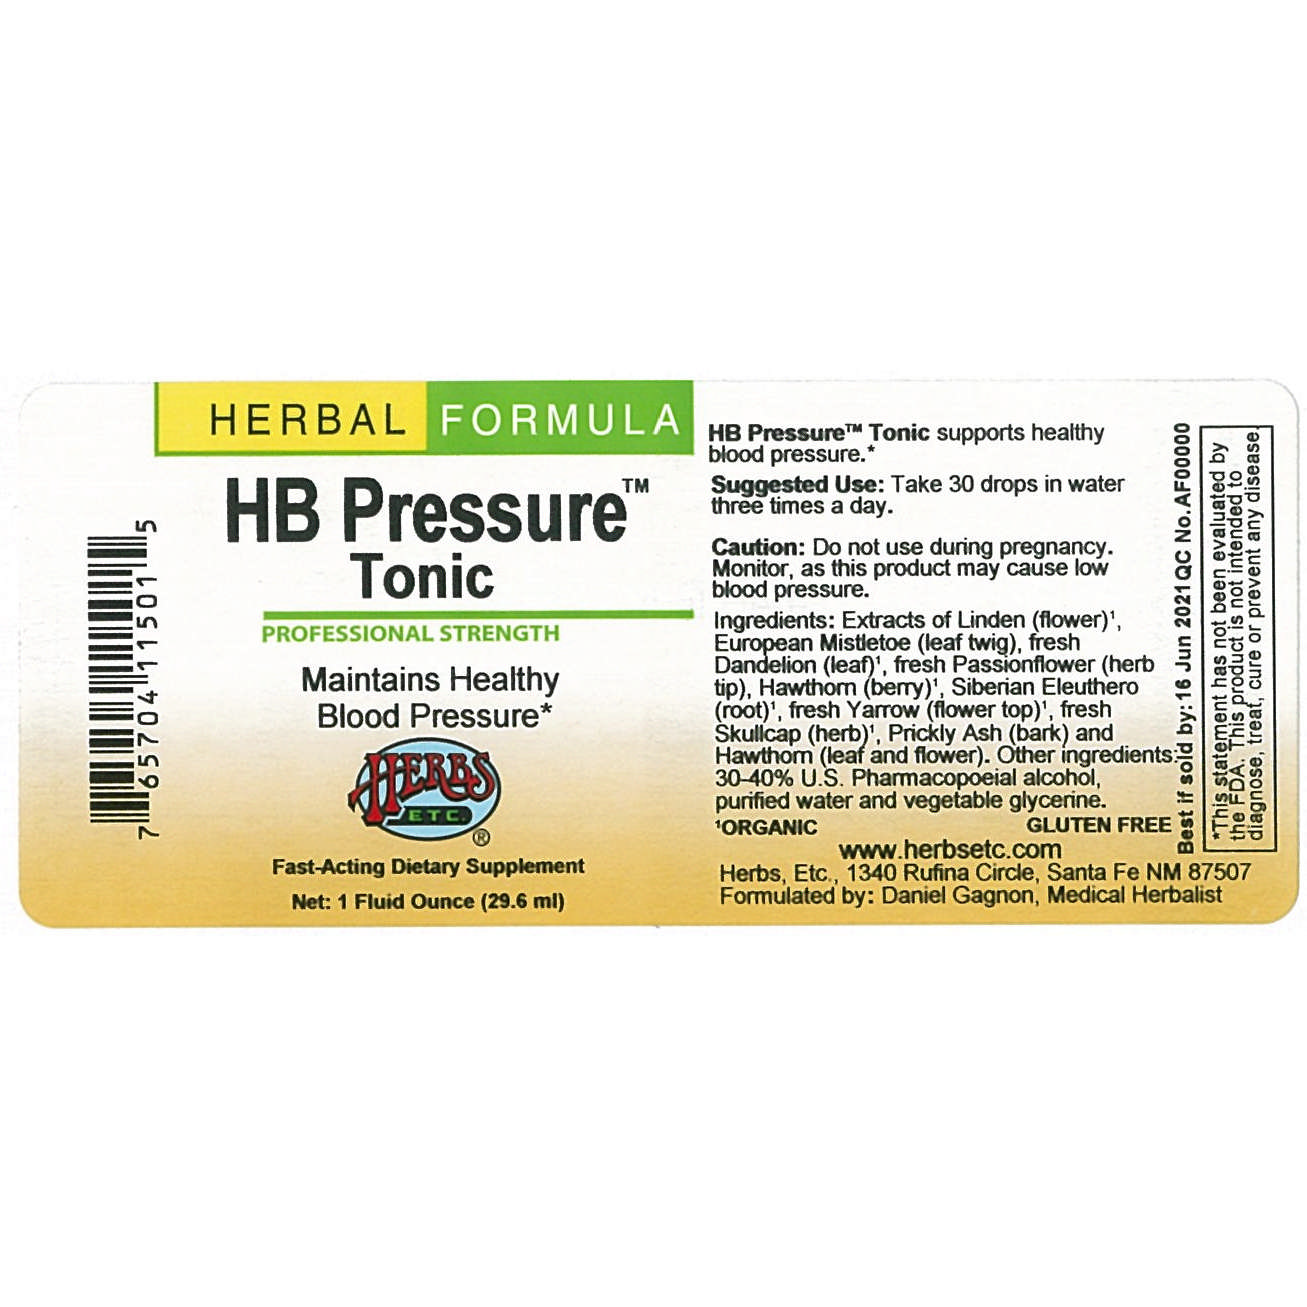 Herbs Etc - Hb Pressure Tonic